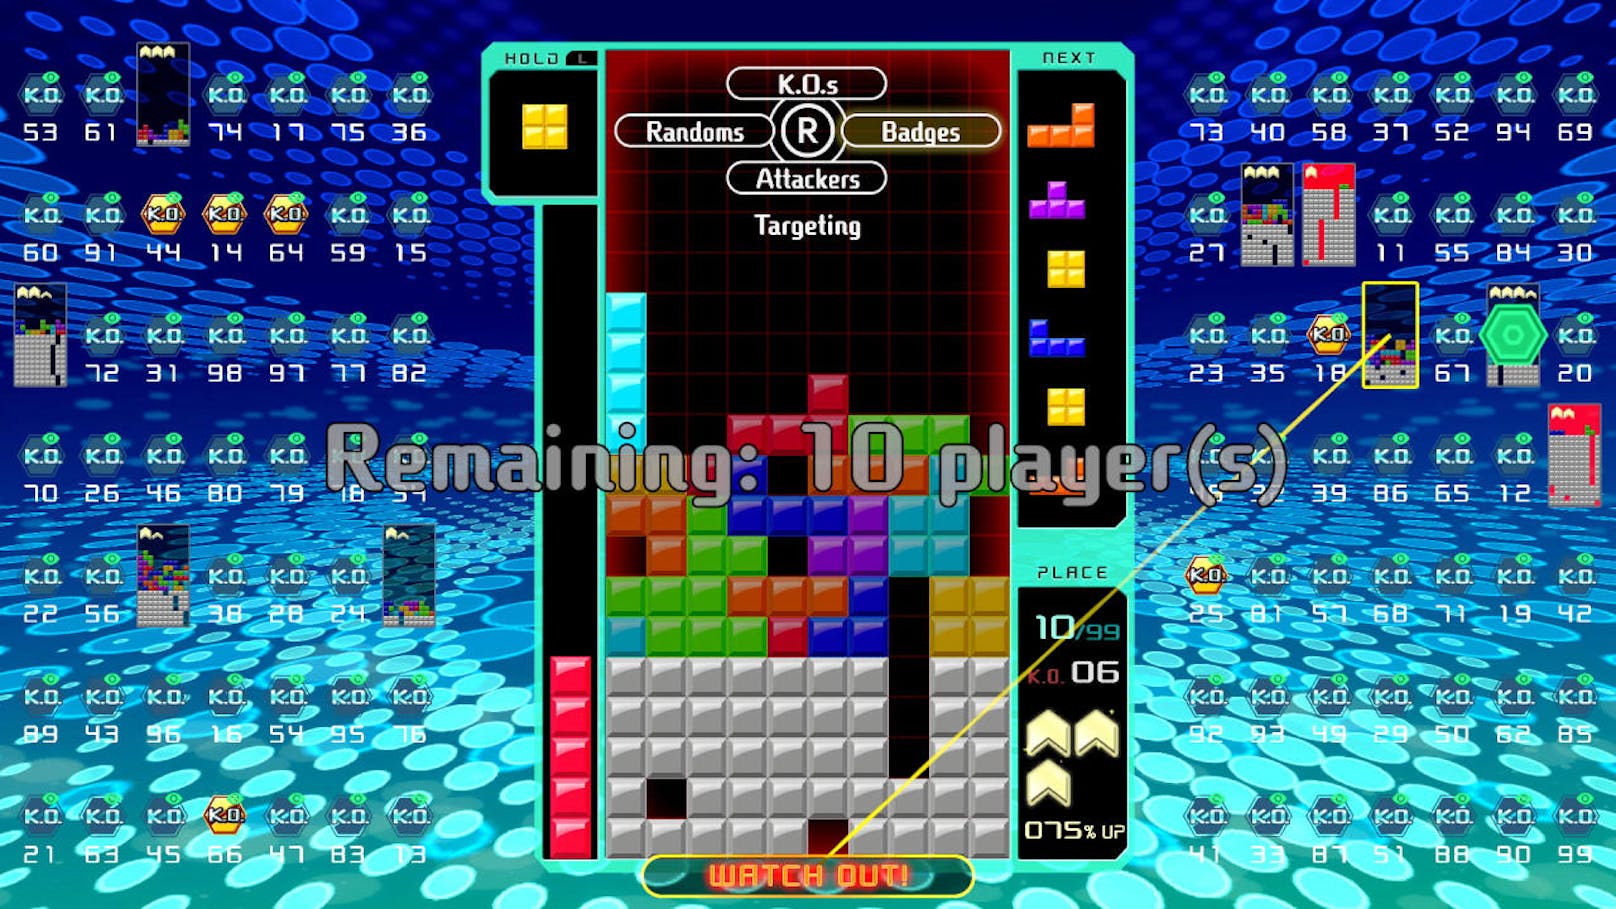  <a href="https://www.heute.at/digital/games/story/Tetris-99-Big-Block-DLC-Test-Nintendo-Switch-44079723" target="_blank">Tetris 99 & Big Block DLC</a>